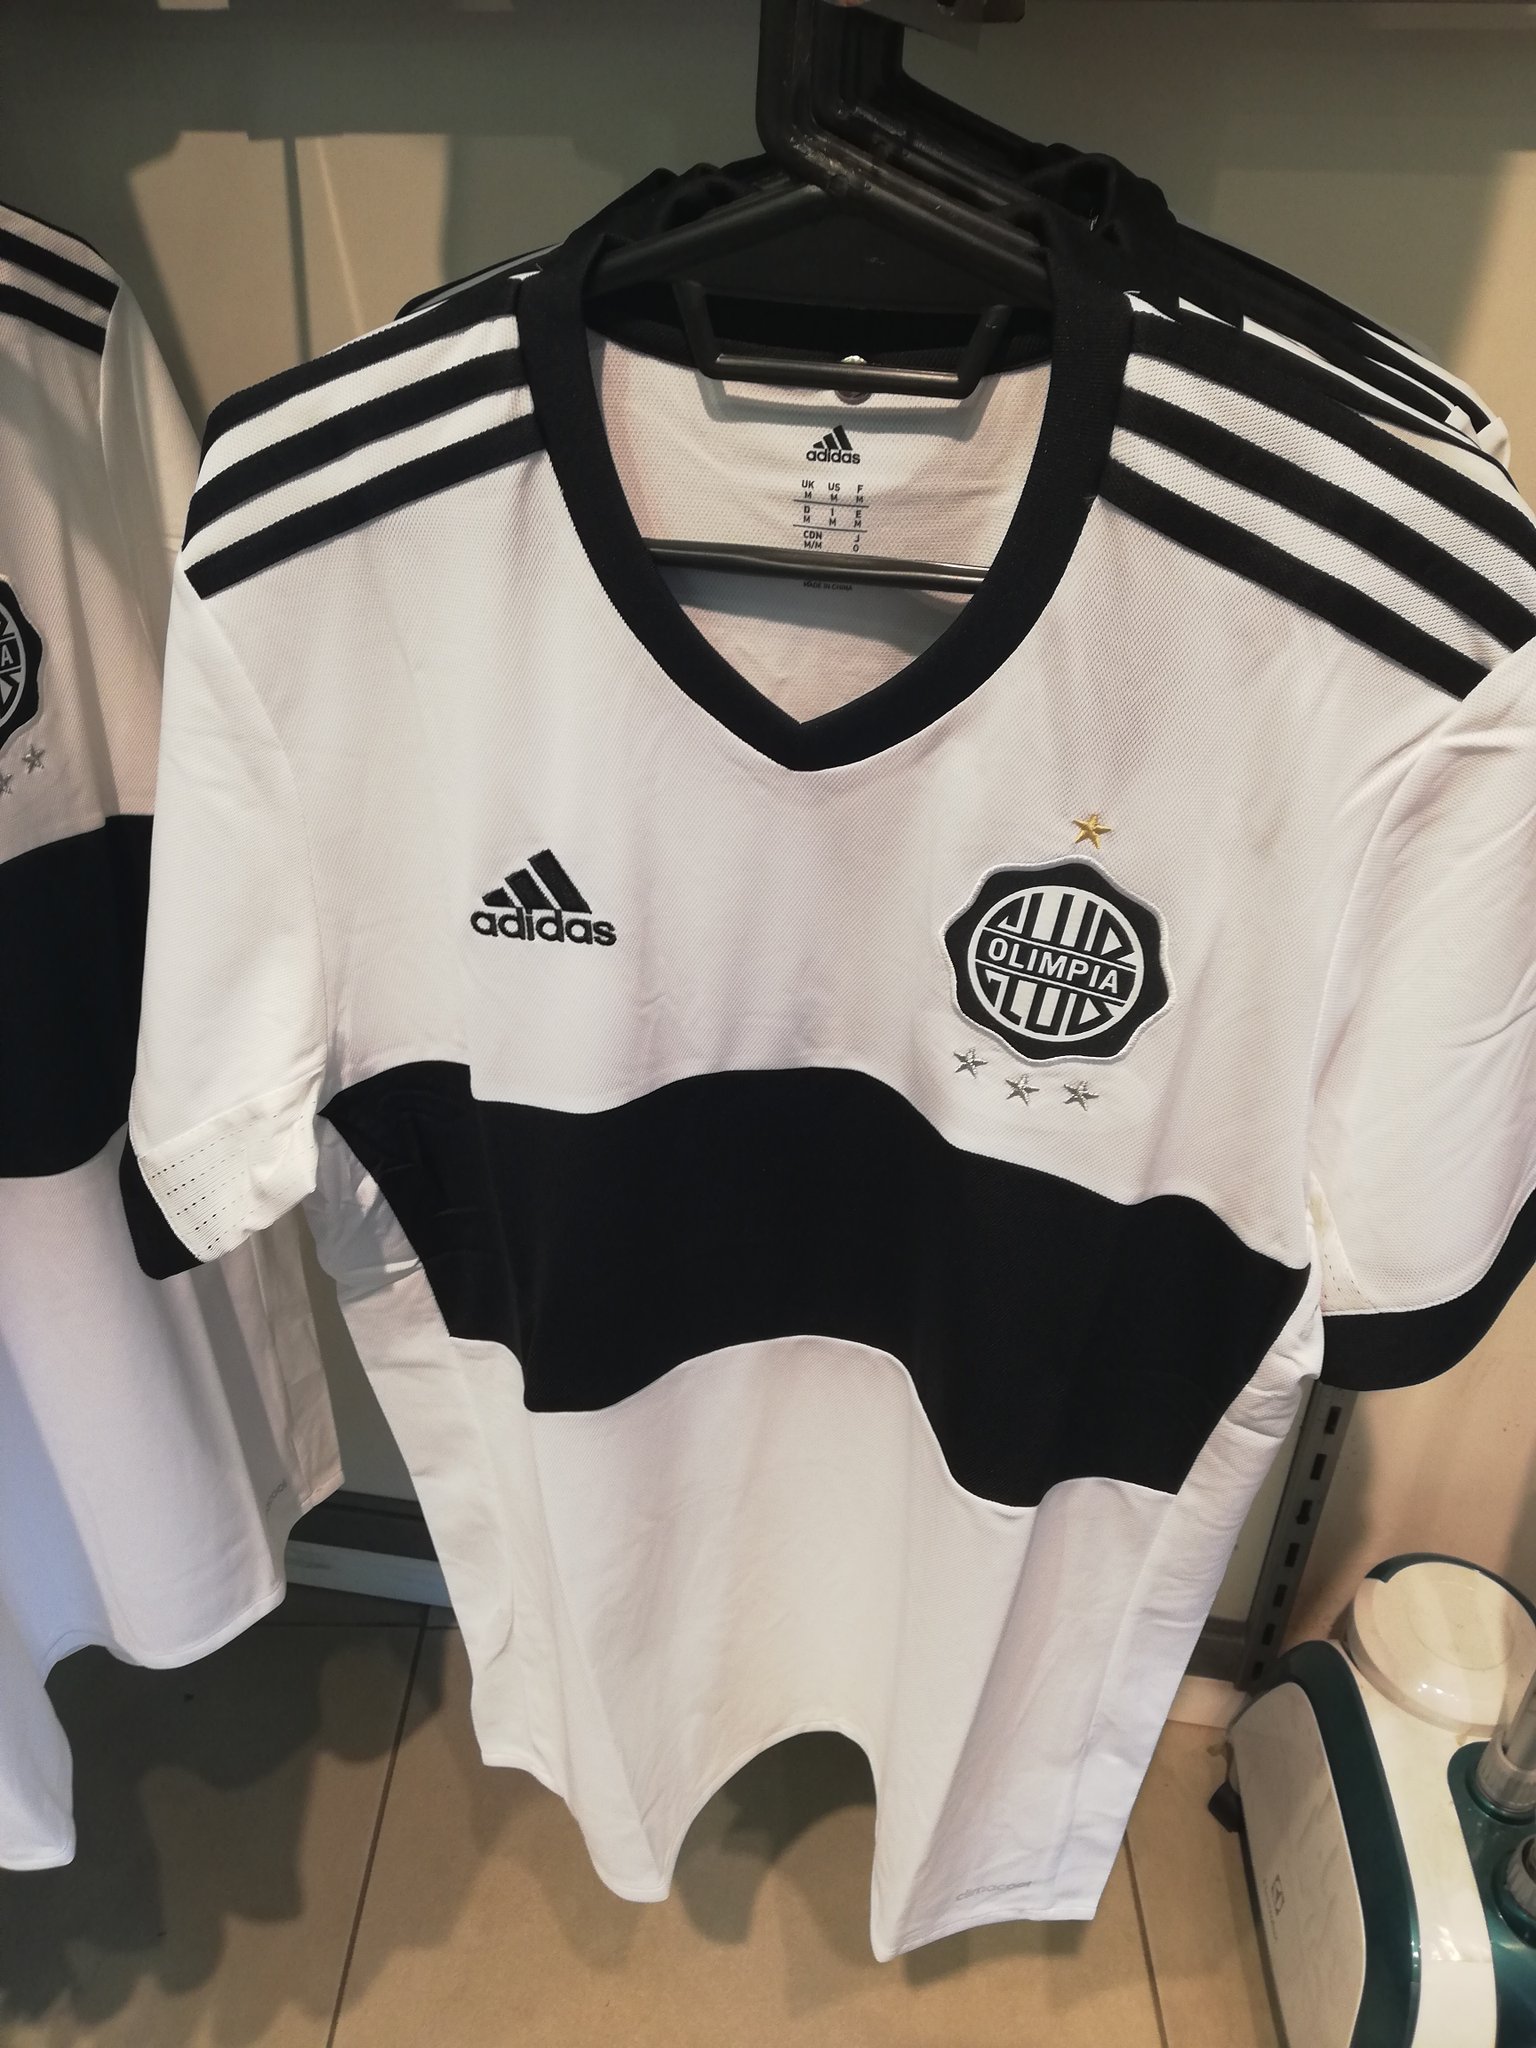 Mauri Mereles trên Twitter: "Camiseta sin publicidad de Olimpia Adidas Outlet. Sería el primer modelo que se lanzó. ¡Me gusta! 💵 gs https://t.co/uGgDivbndz"